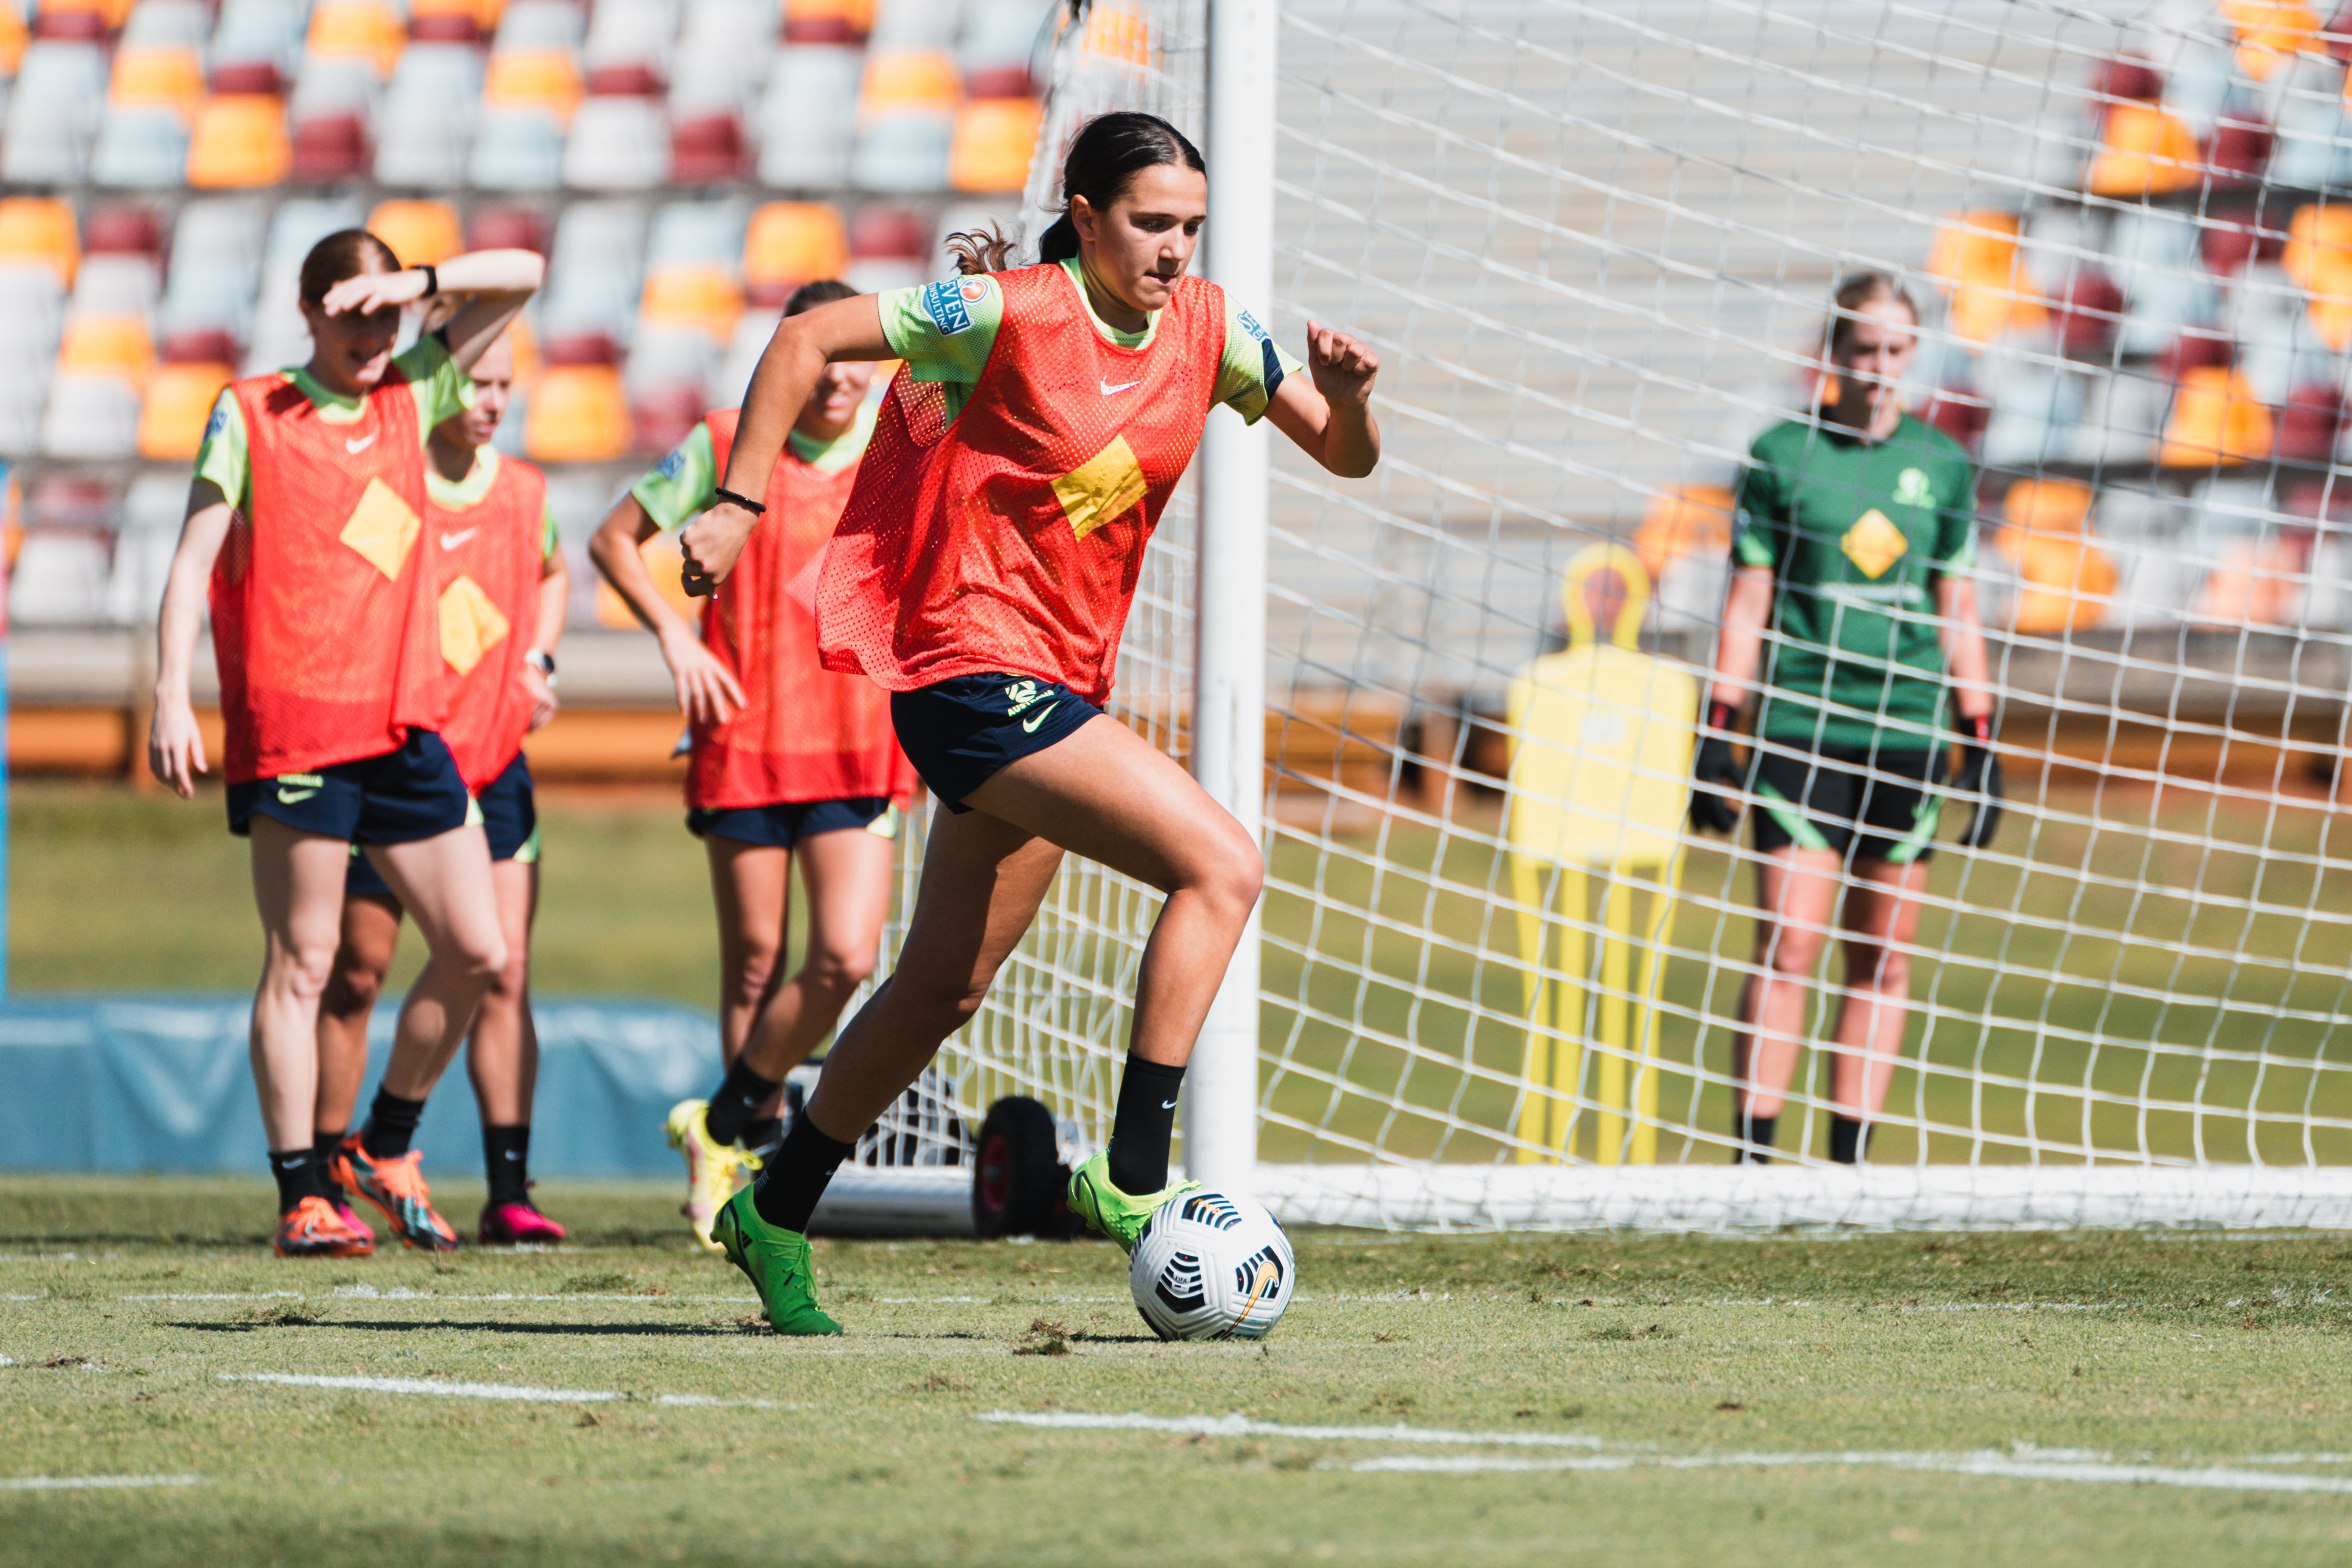 Daniela Galic during U23 training camp at the Queensland Sport and Athletics Centre. (Photo: Ann Odong/Football Australia)